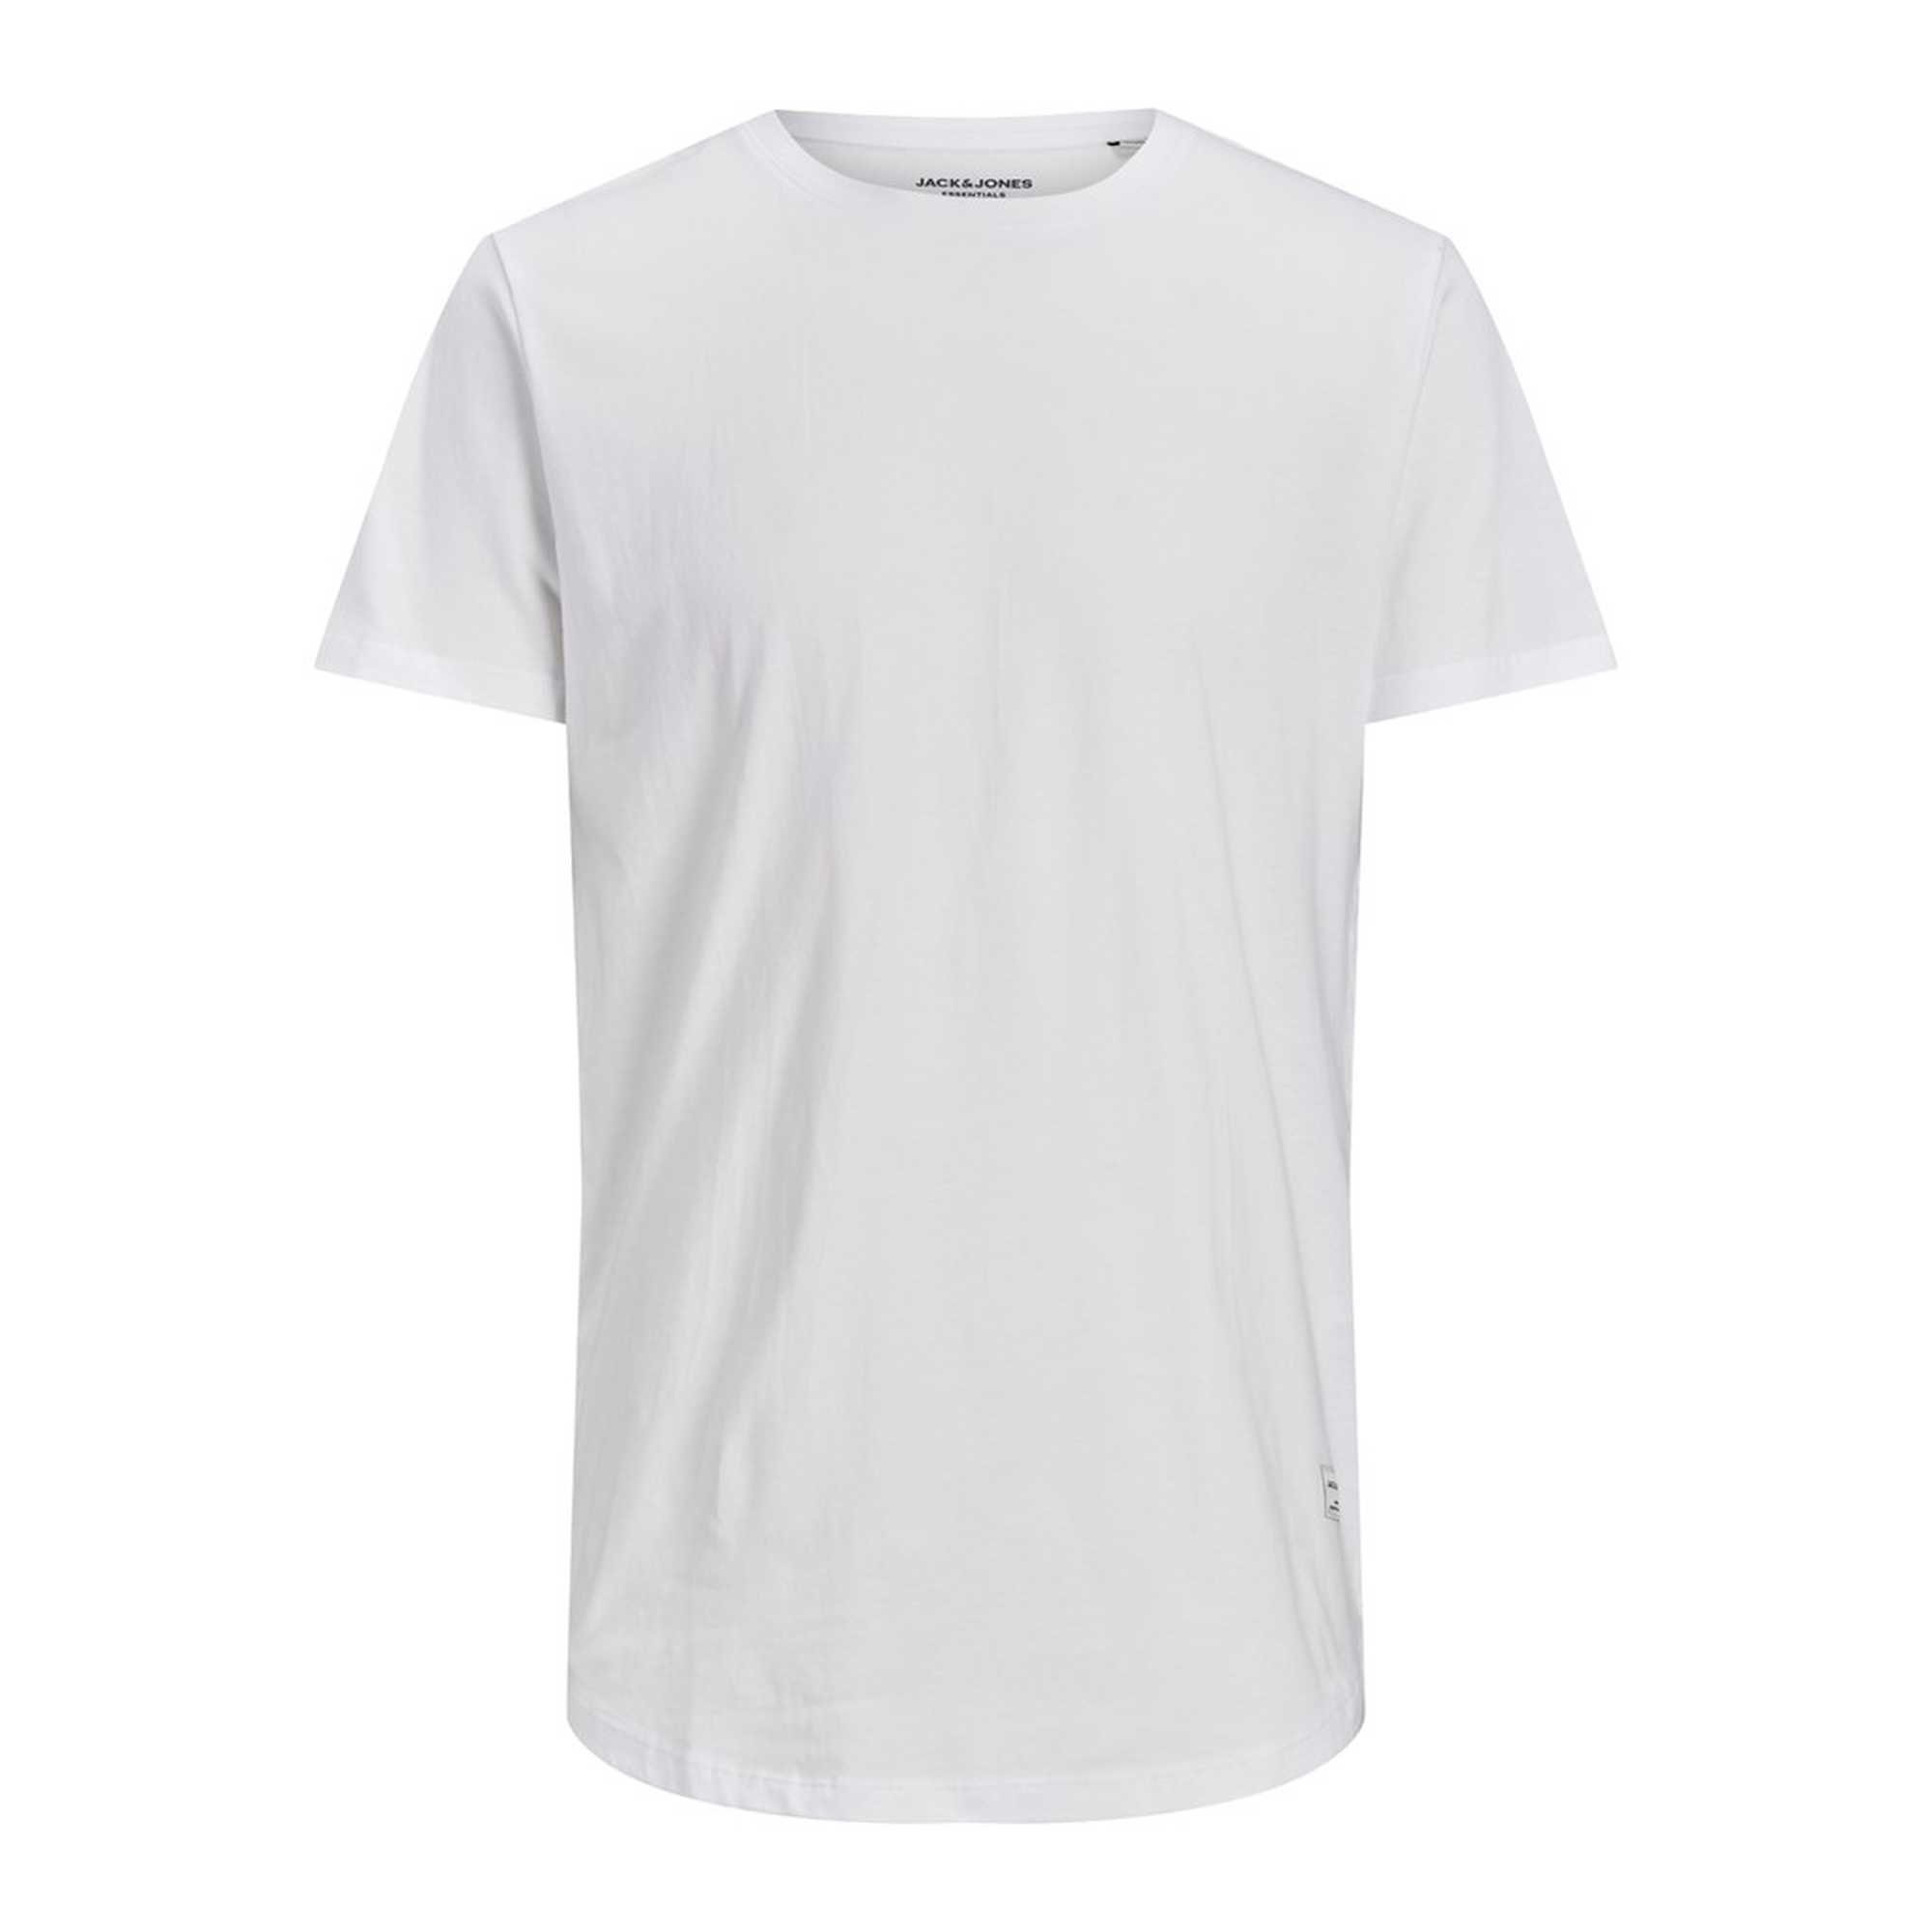 7er T-Shirt NECK T-Shirt, & Jones Jack Pack TEE Herren Weiß/Schwarz - JJENOA CREW